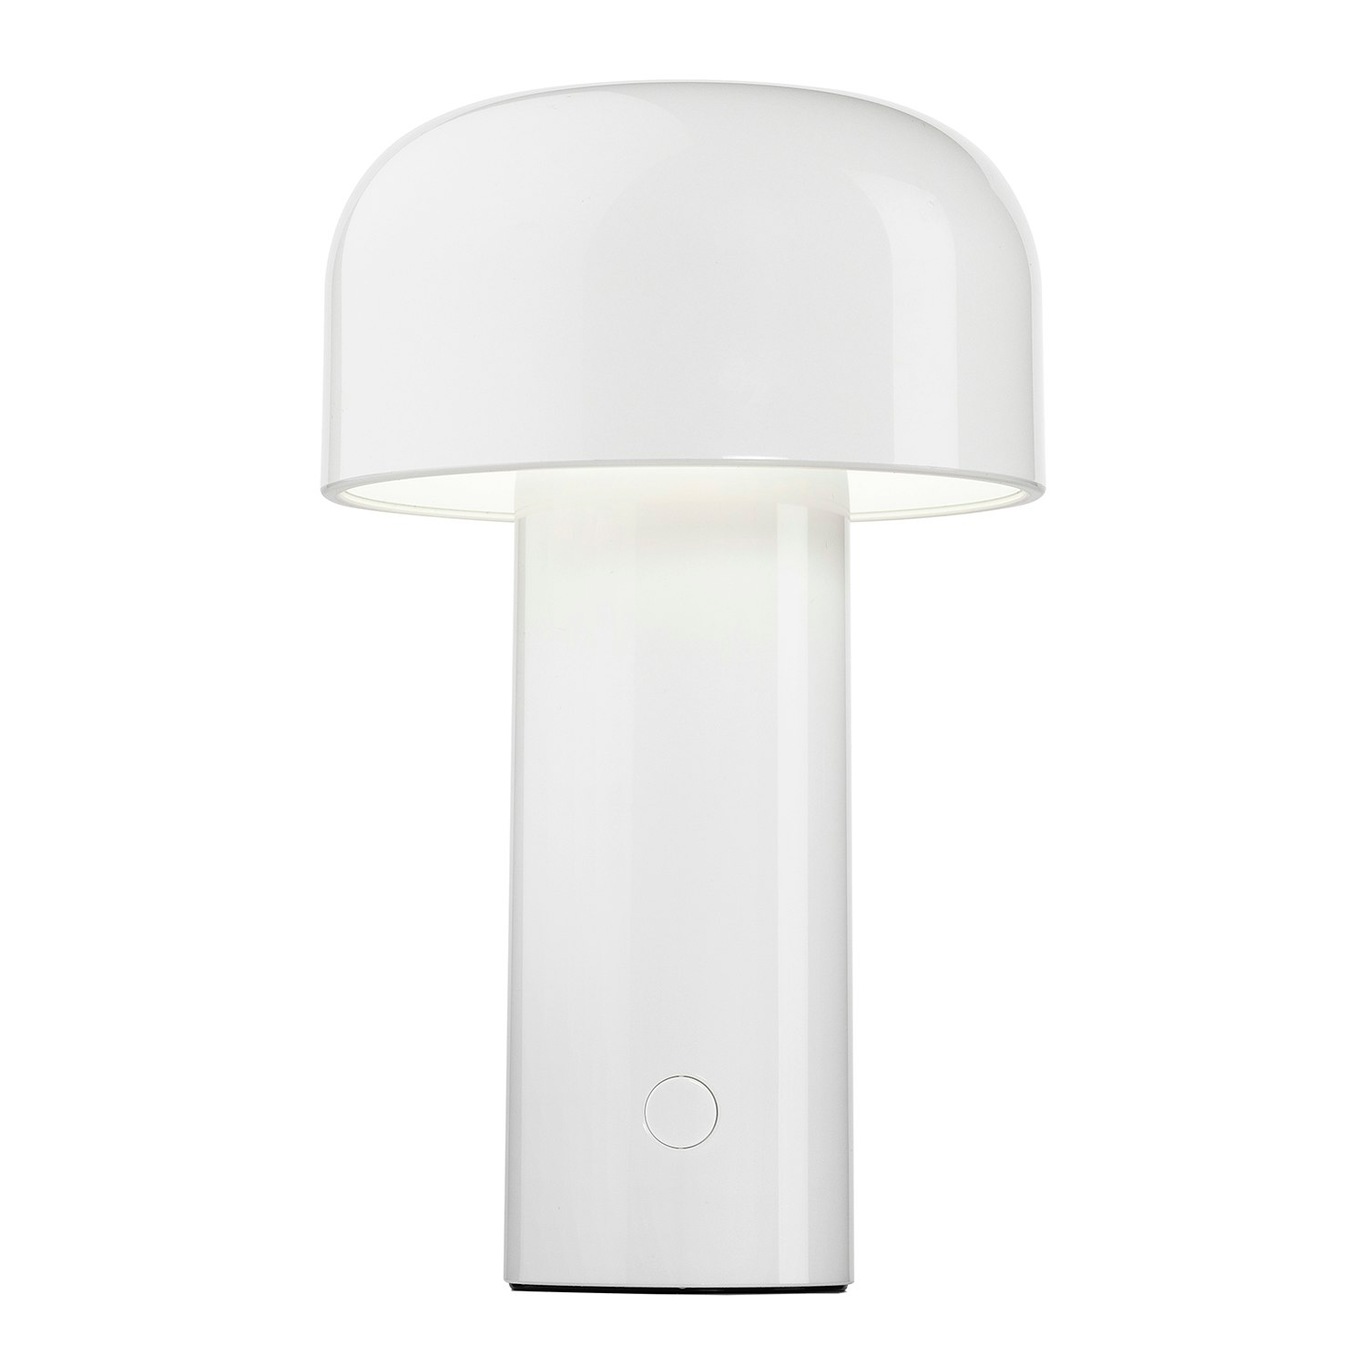 Bellhop Table Lamp Portable, White